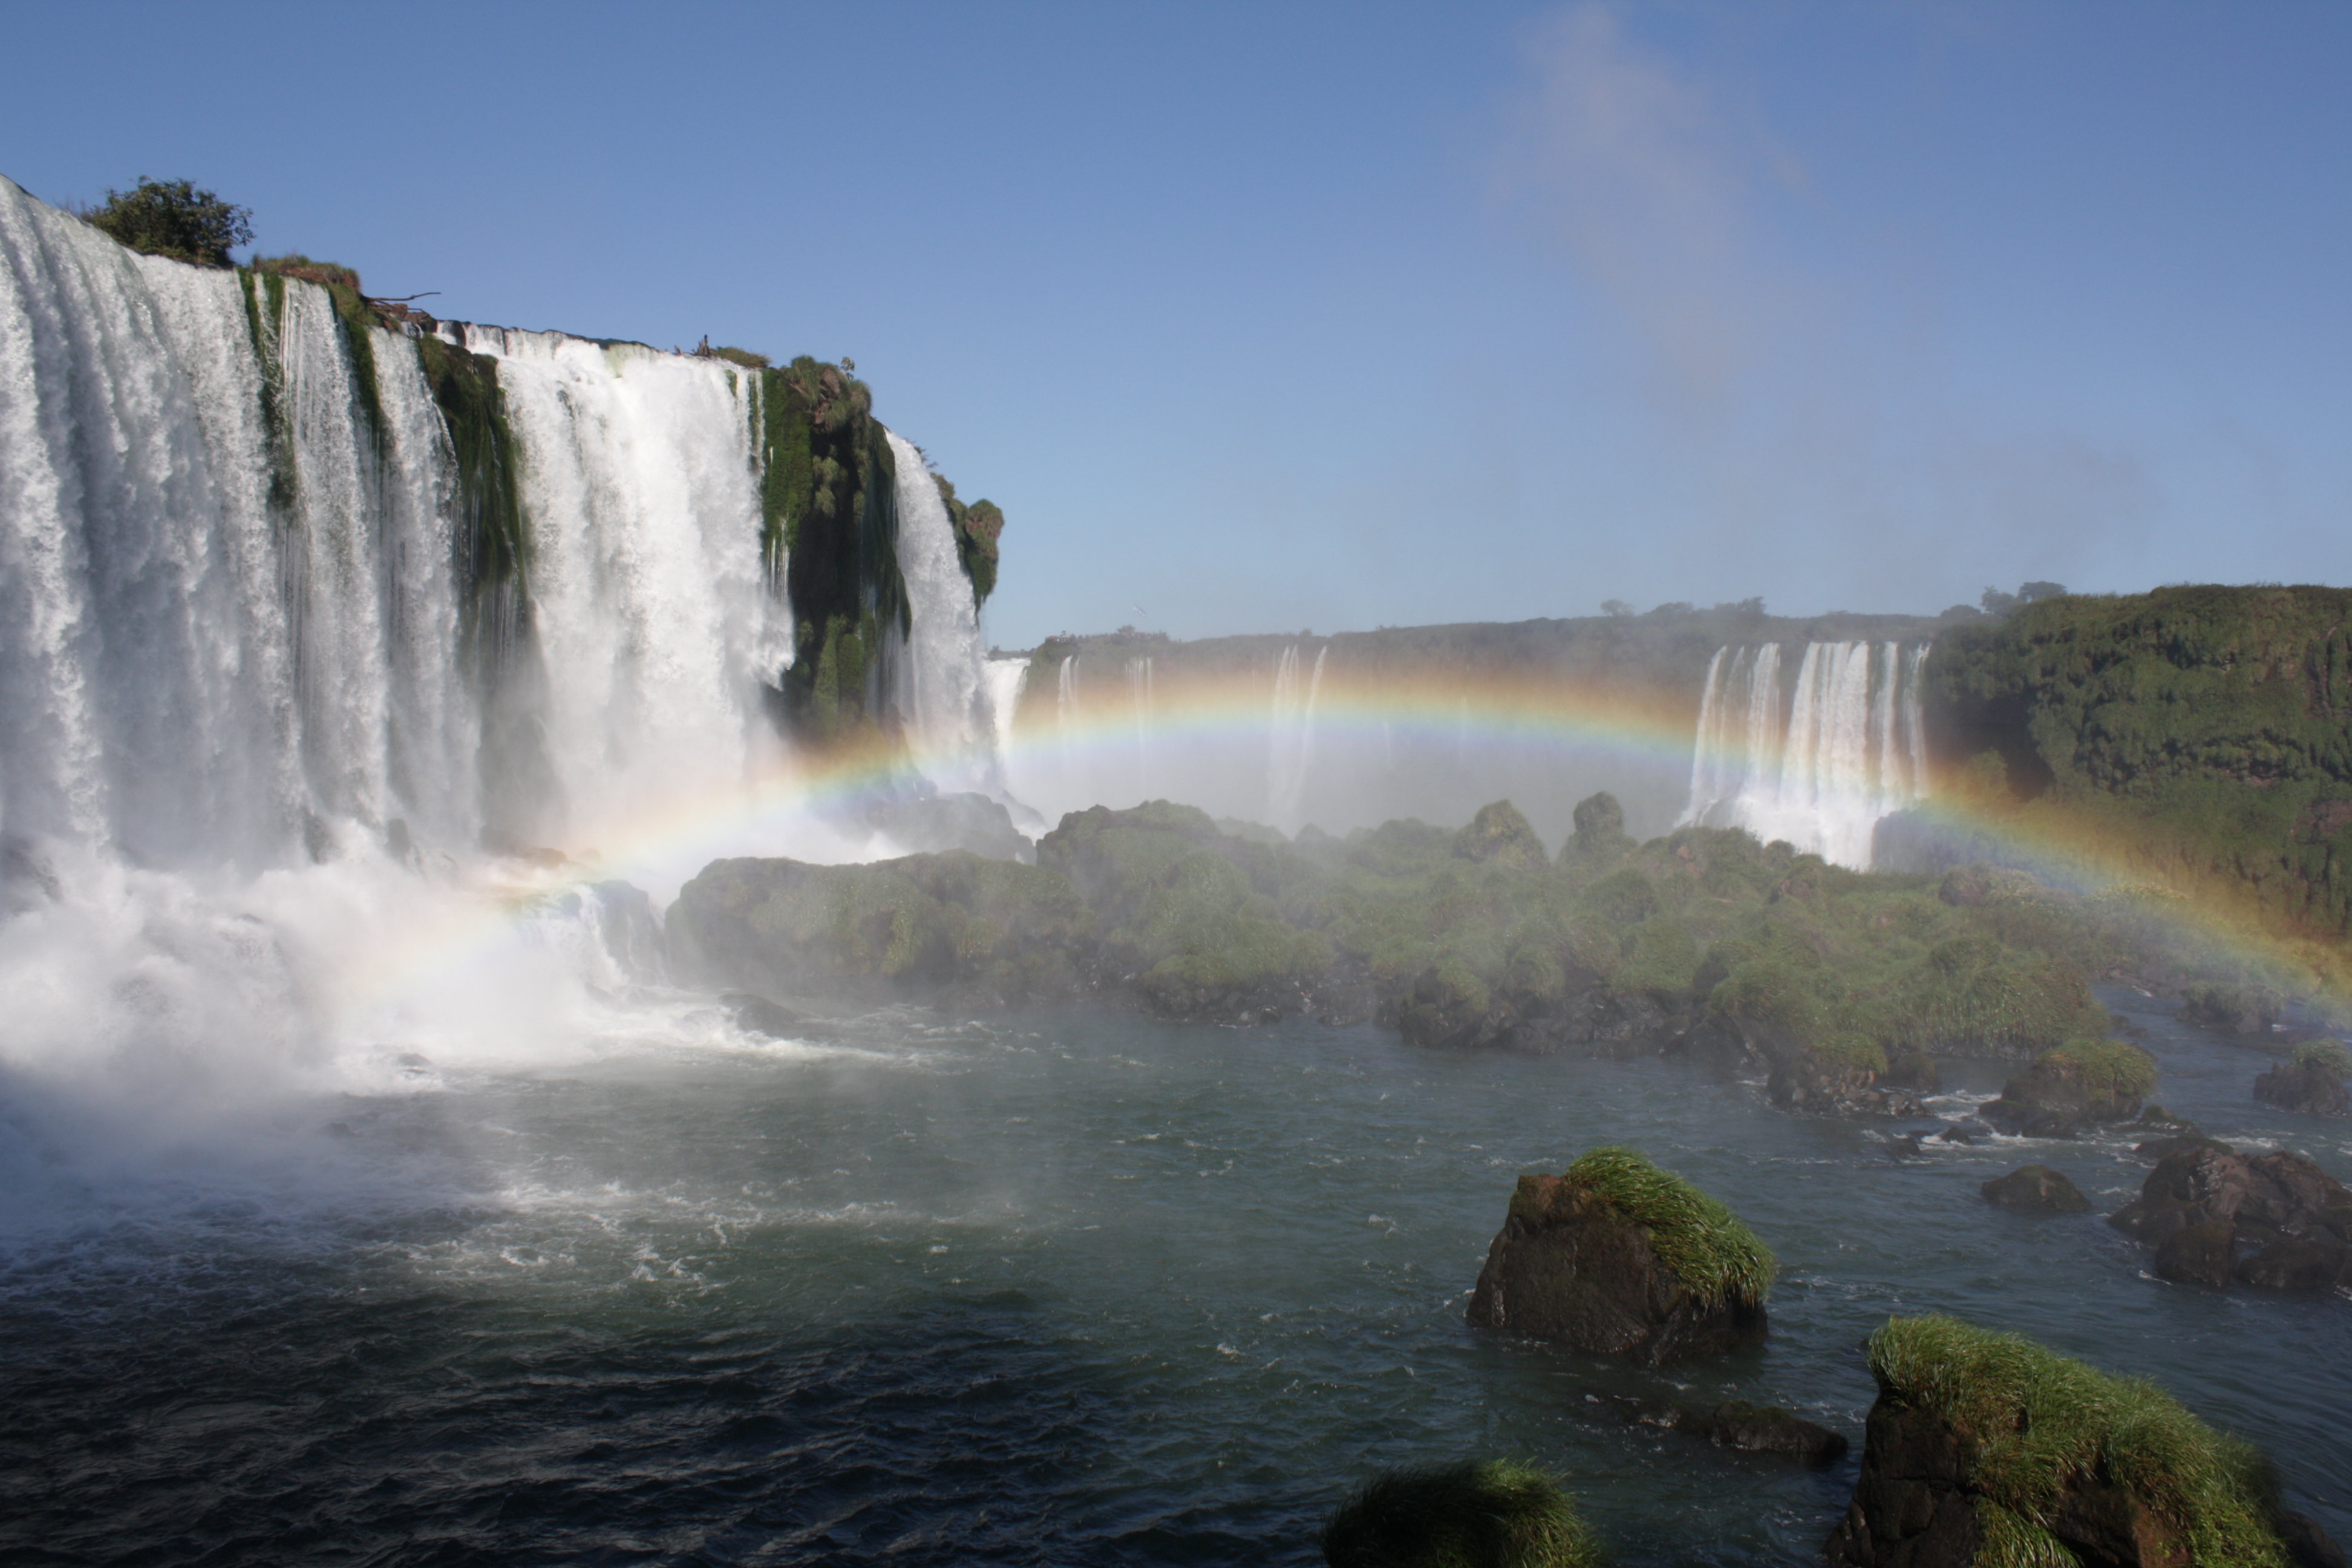 A rainbow arcs over the foamy river, Iguazu Falls, Foz do Iguacu, Brazil